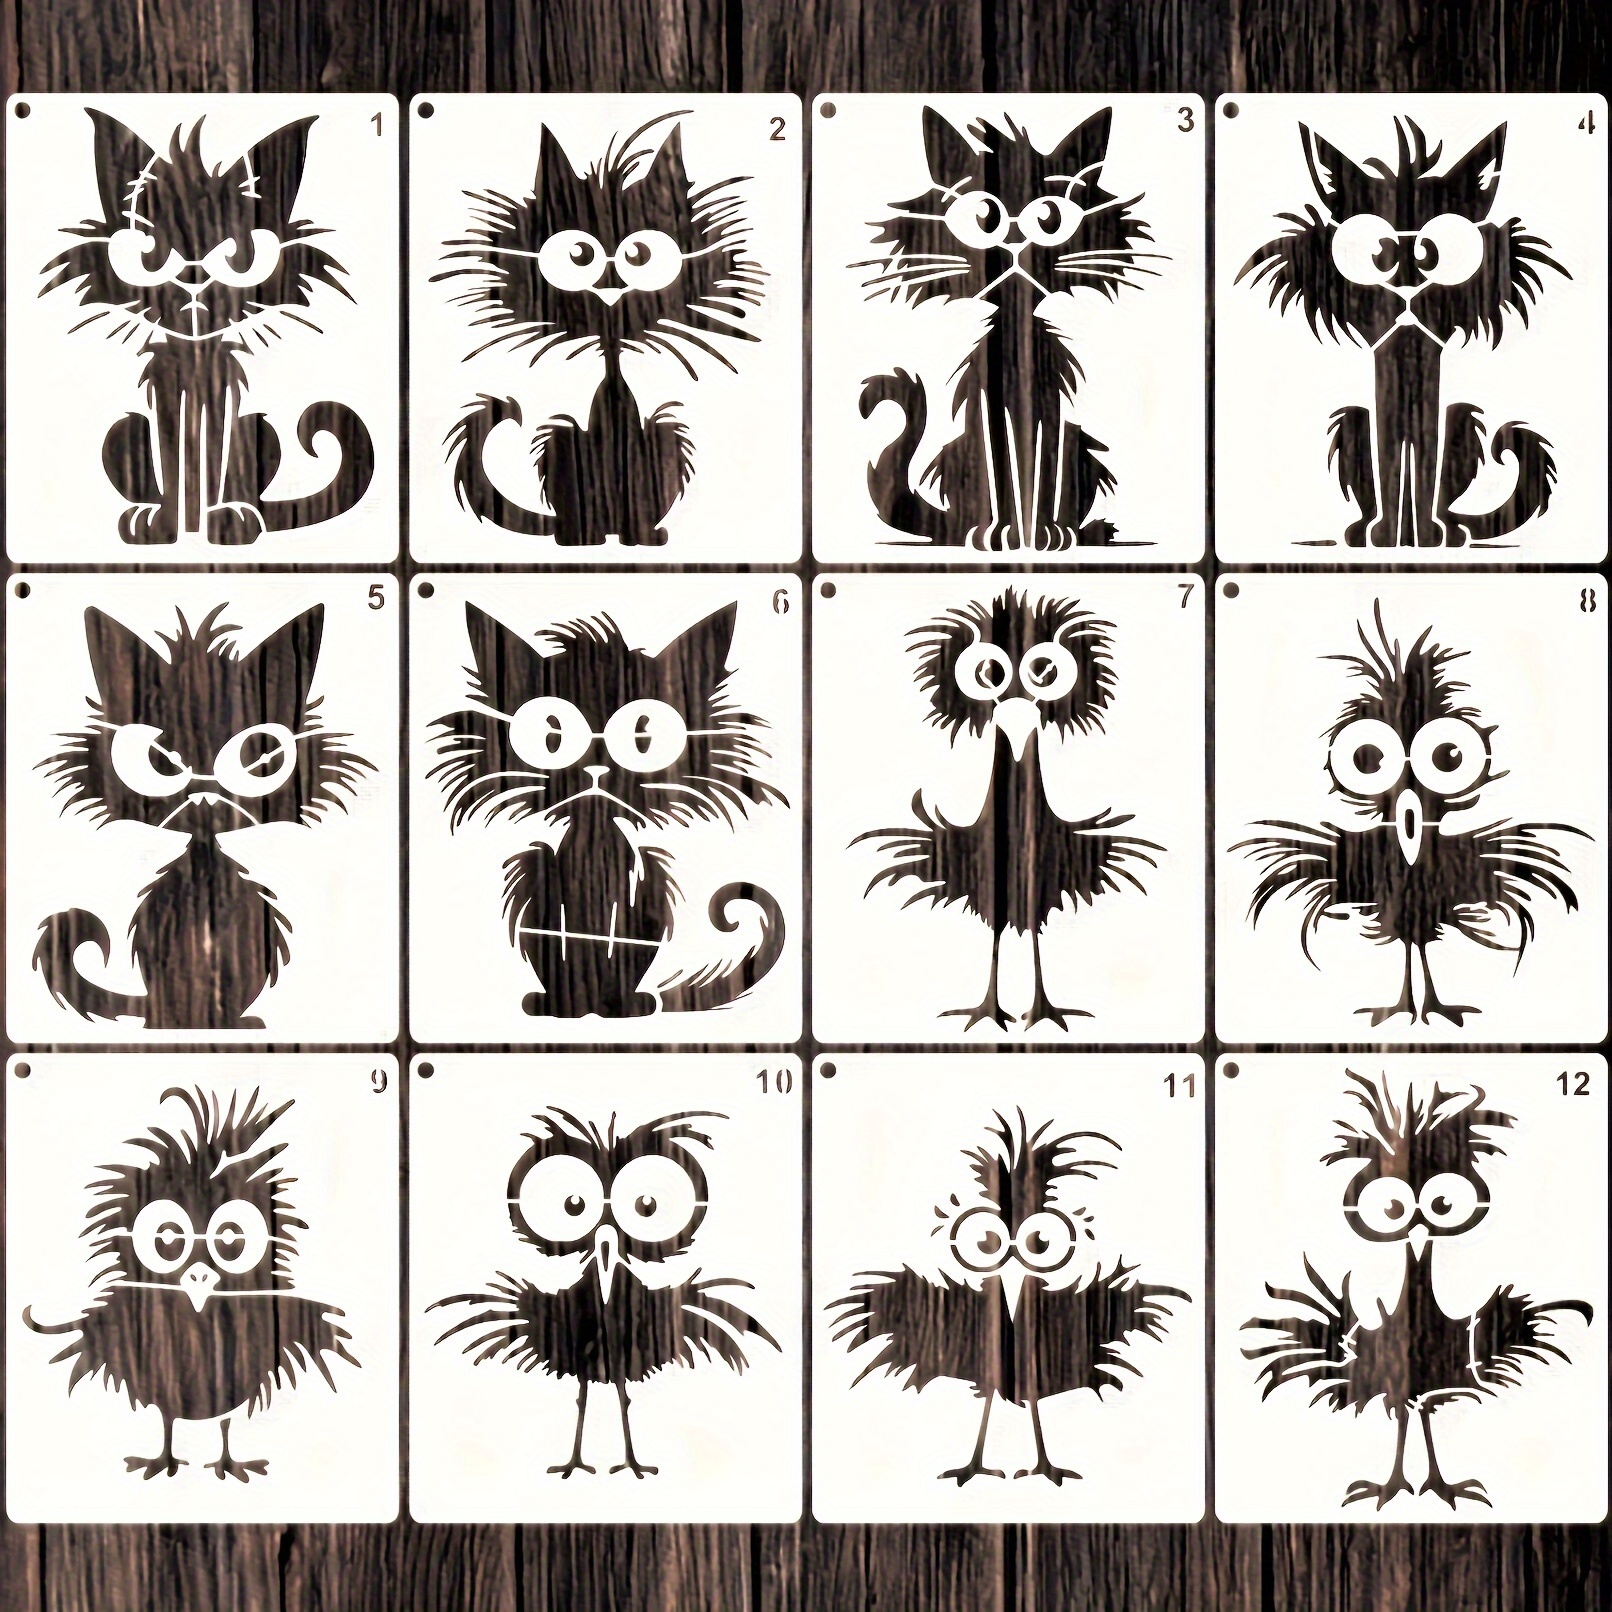 

12pcs Cartoon Birds Cartoon Cat Stencils For Painting Crafts Reusable Painting Pattern Templates For Diy Scrapbook Sign Shirt Canvas Wall Furniture Floor